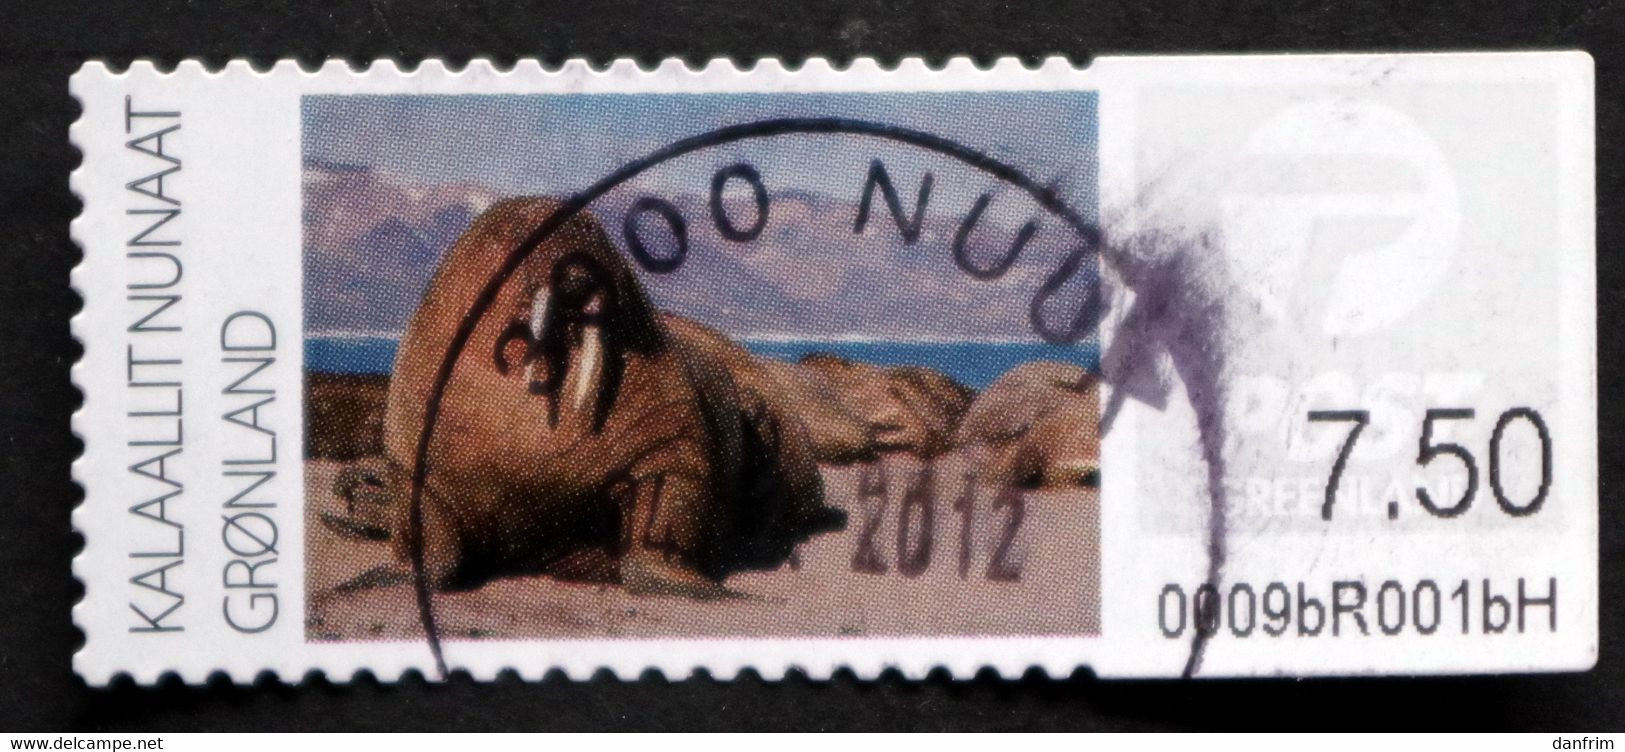 Greenland 2011   Walrus    MiNr.8  7,50Kr.( Lot   G 2138) - Machine Stamps